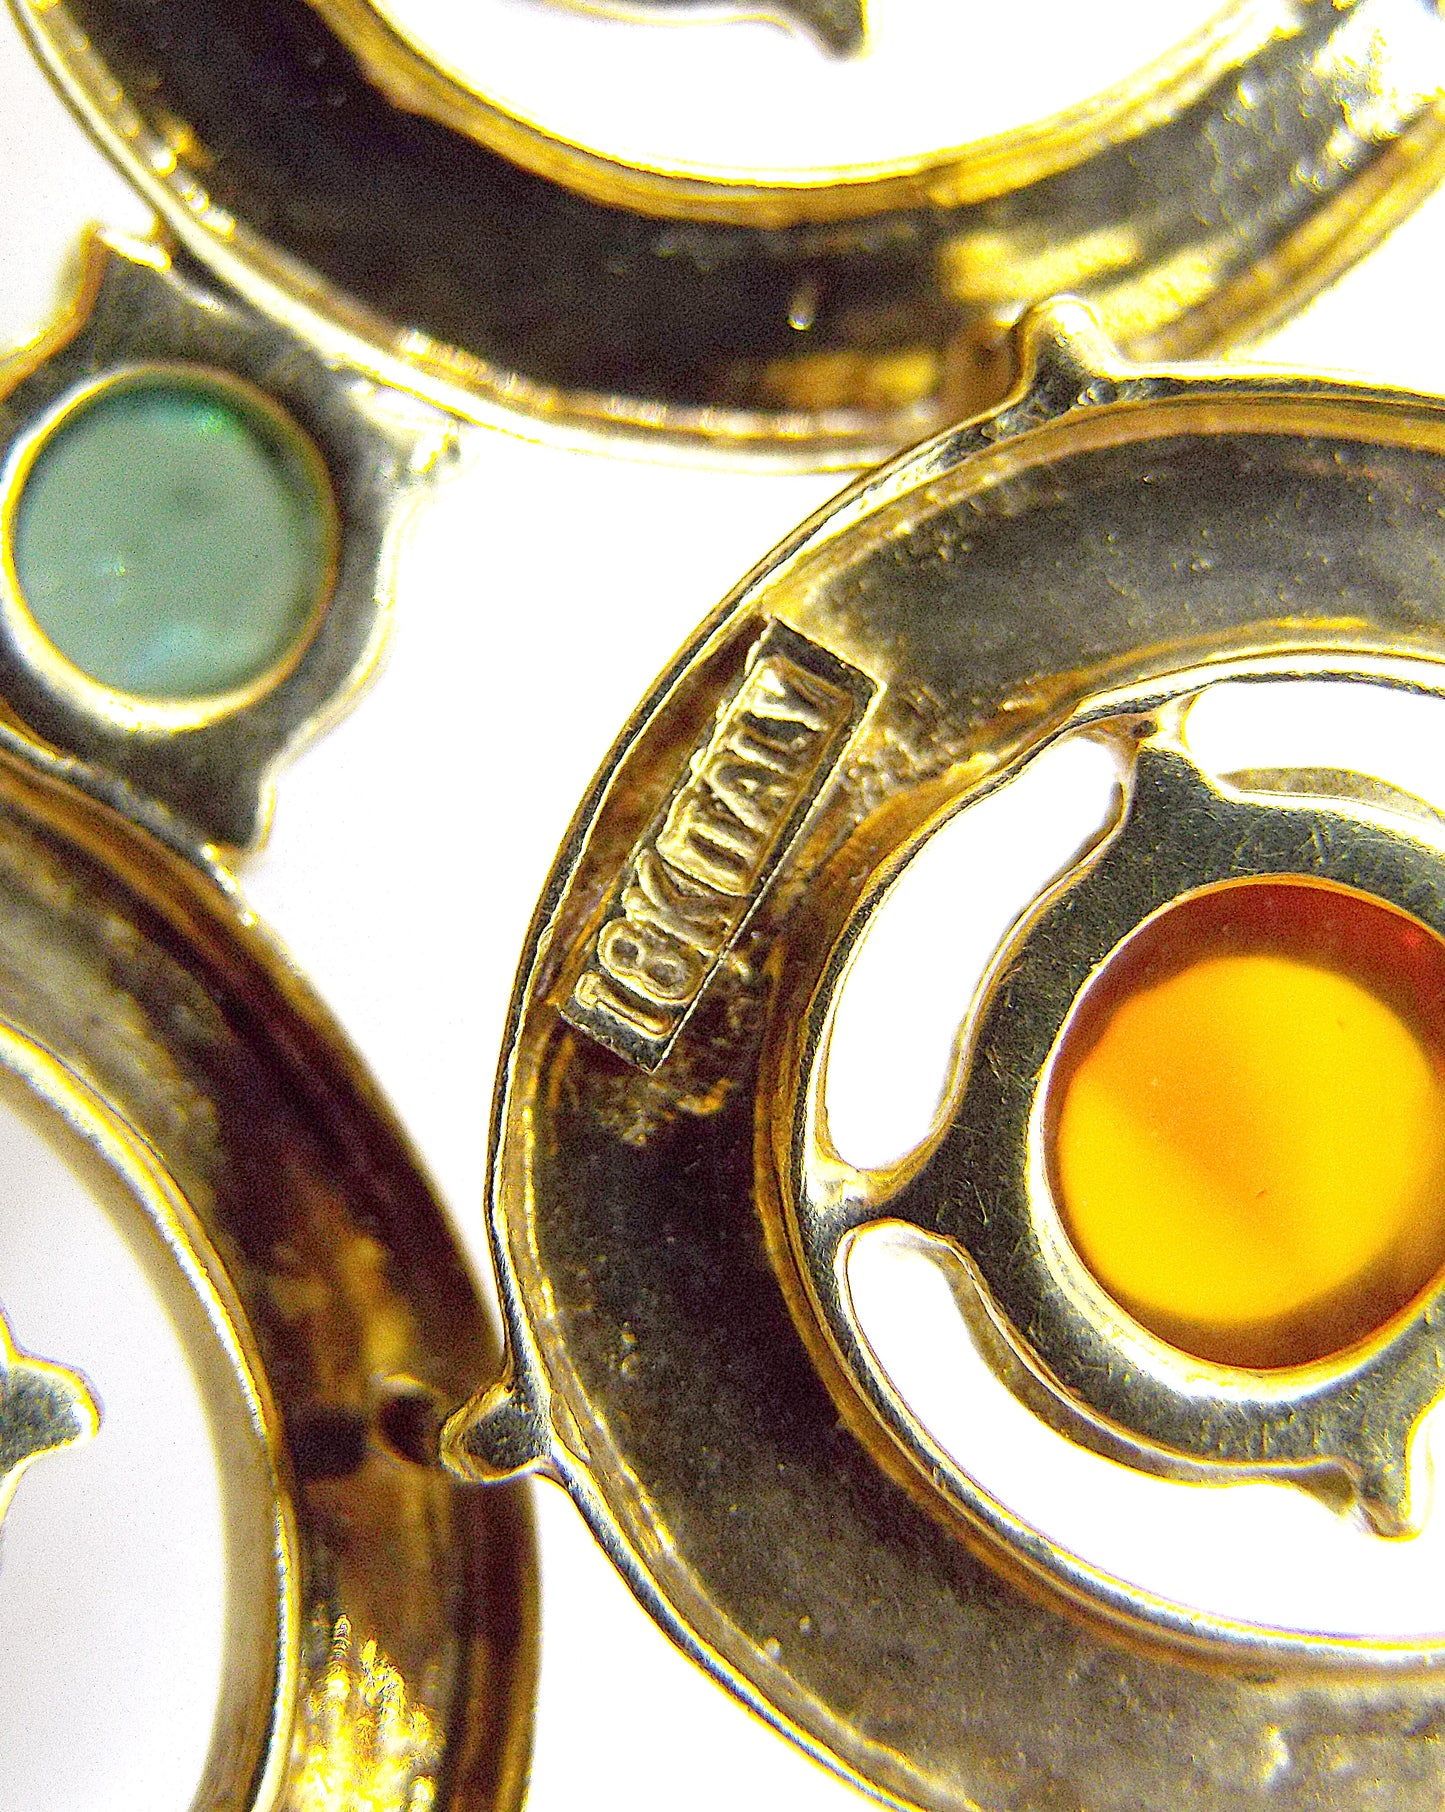 Italian 18K Yellow Gold Citrine Green Fluorite Pendant Necklace